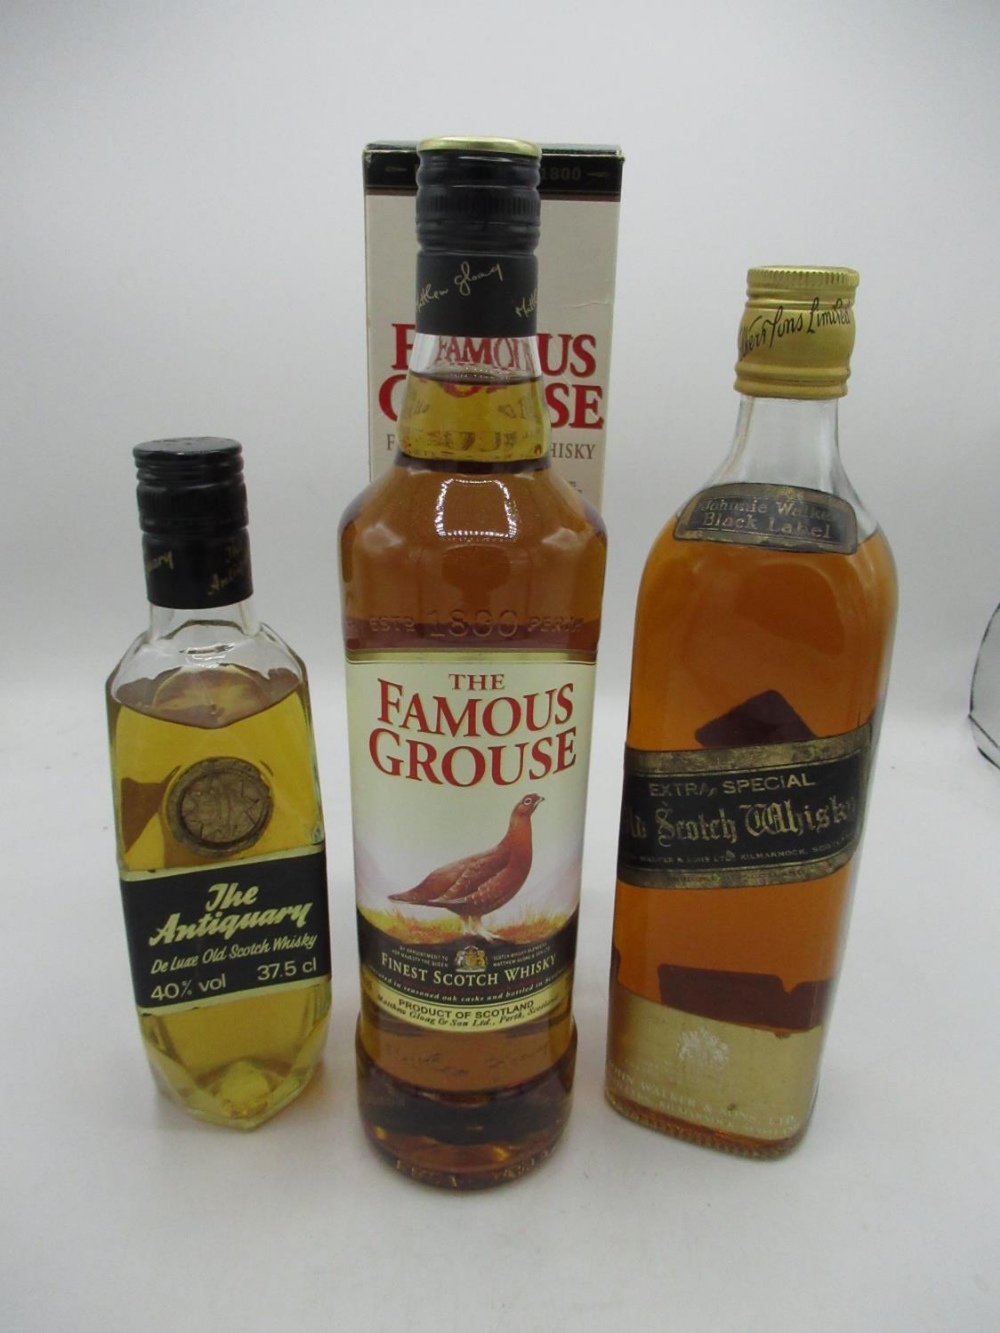 Johnnie Walker Black Label Old Scotch Whisky, Distilled and bottled in Scotland under British